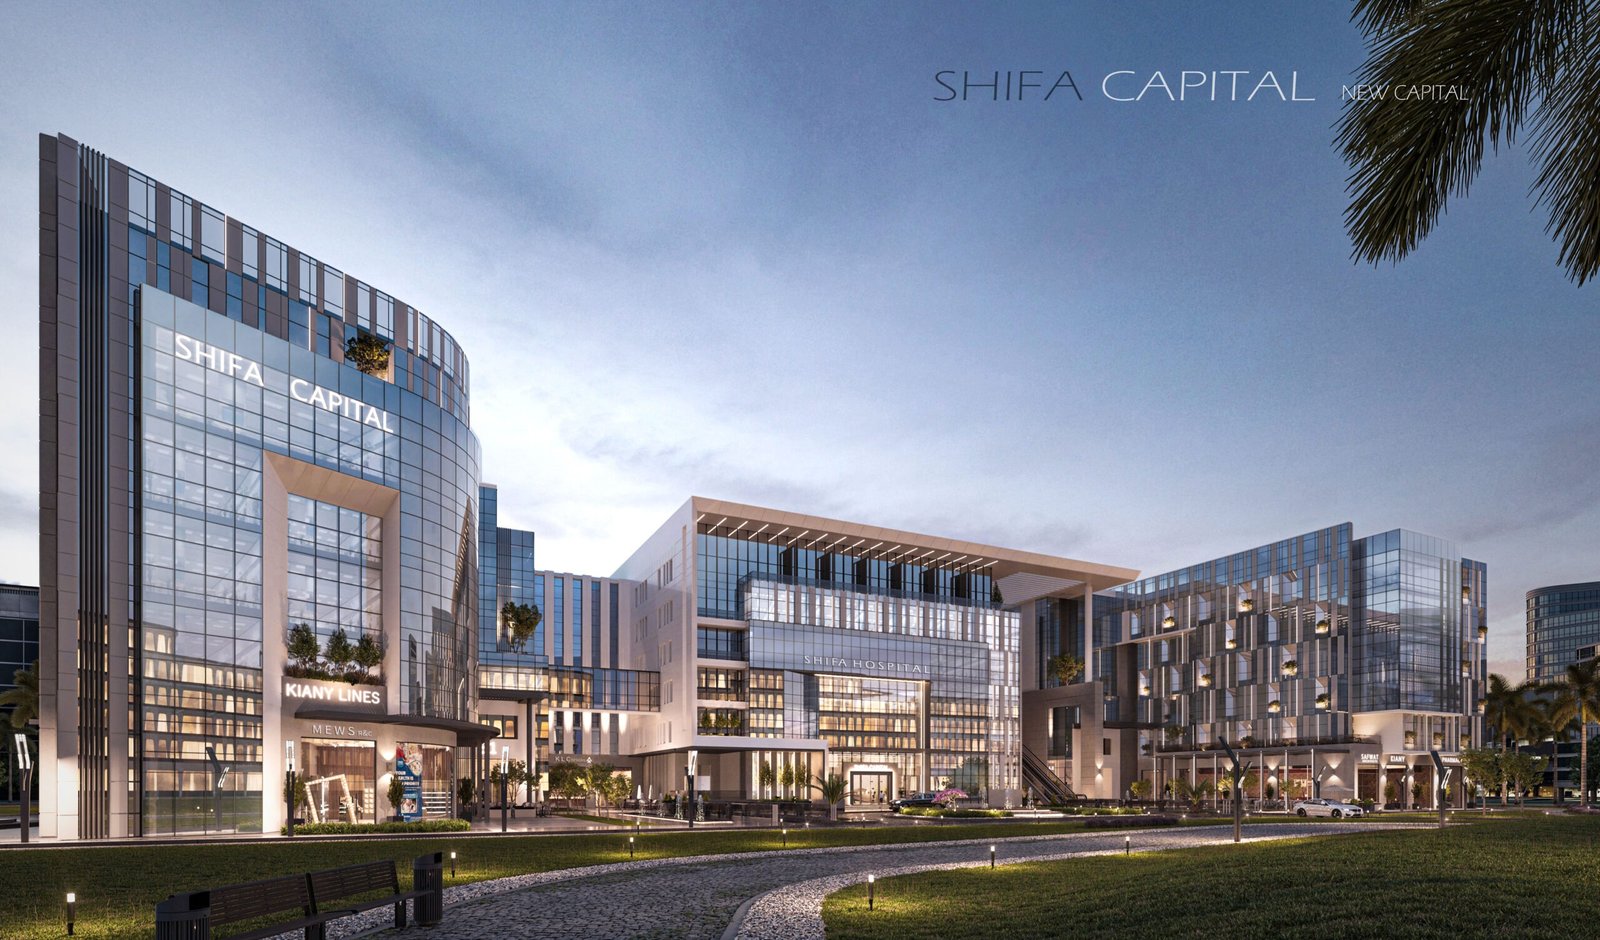 Shifa Capital New Capital